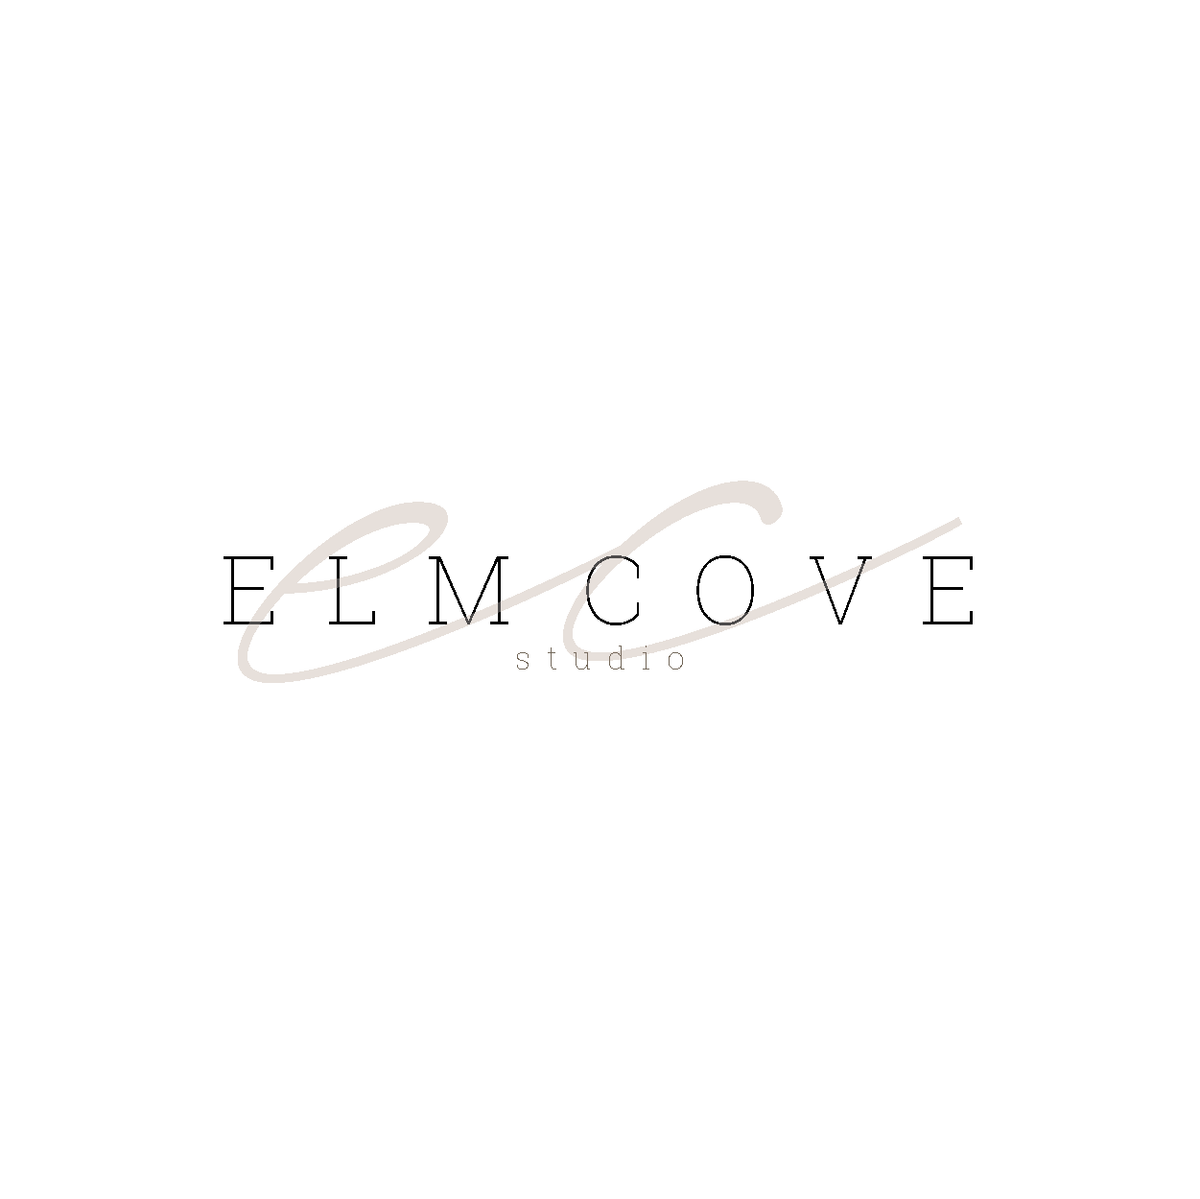 Elm Cove Studio